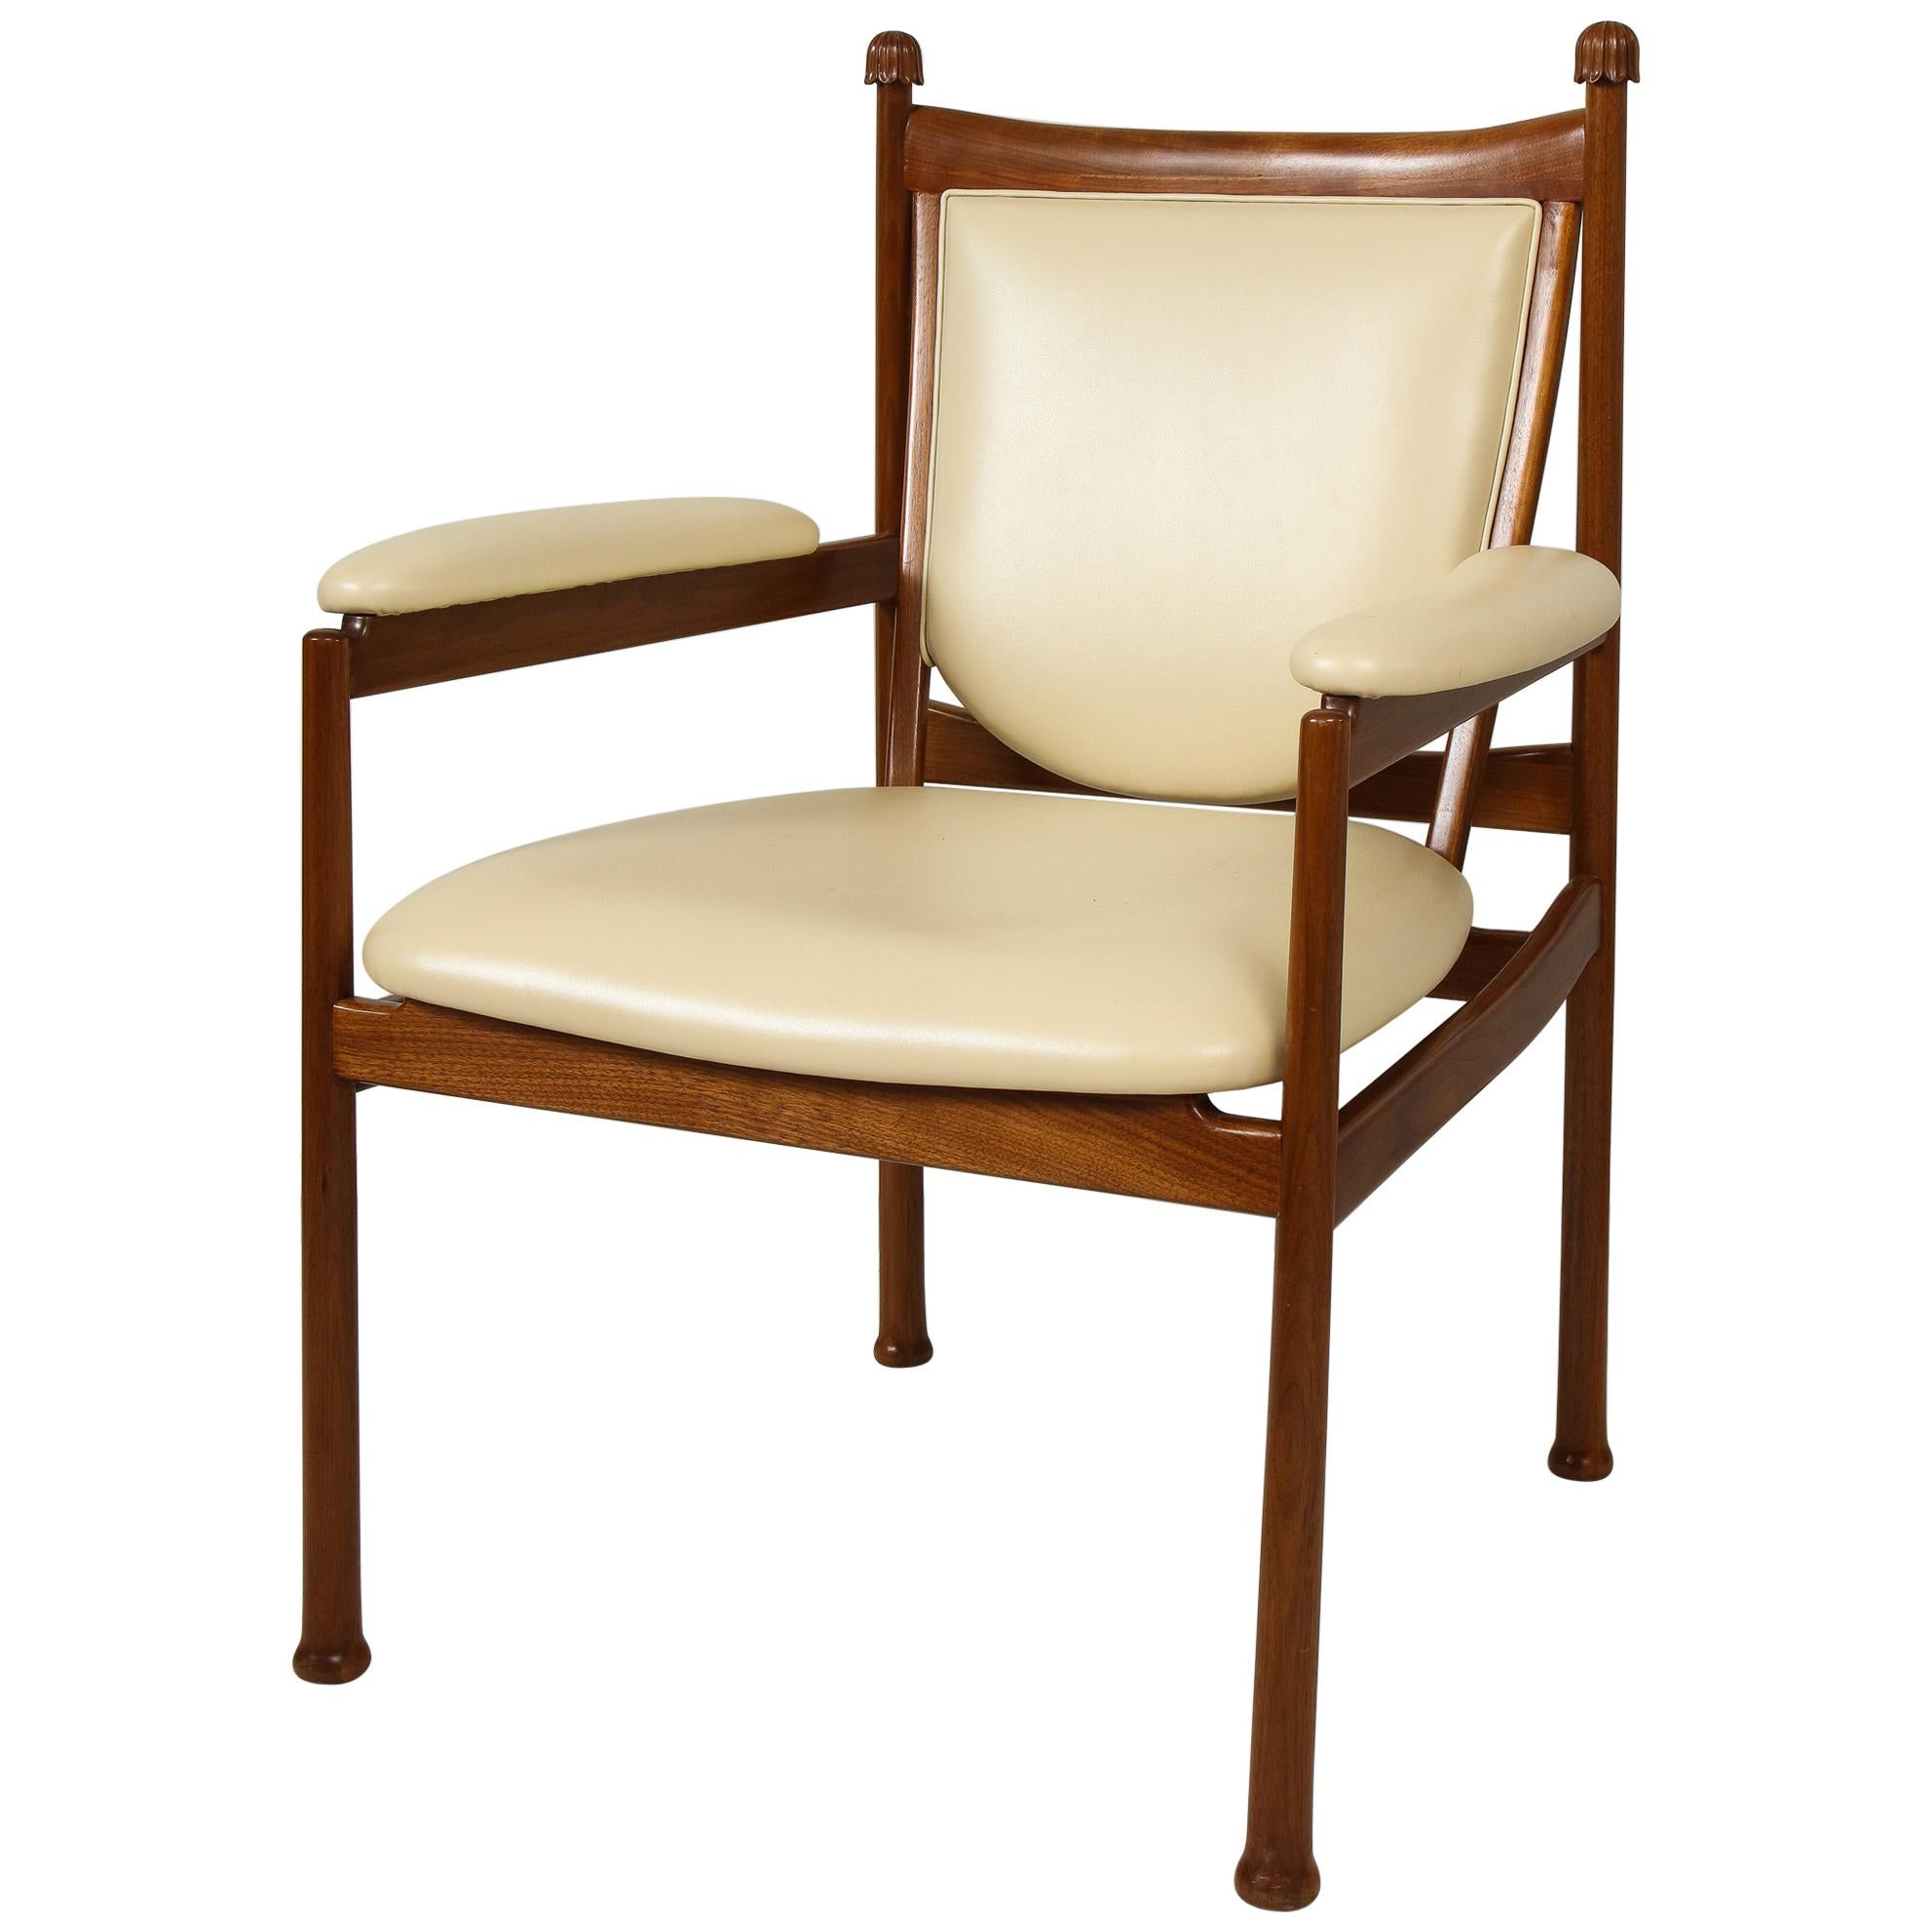 Maßgefertigter Sessel Marion aus Nussbaumholz/ Loungesessel, gepolstert mit cremefarbenem Leder